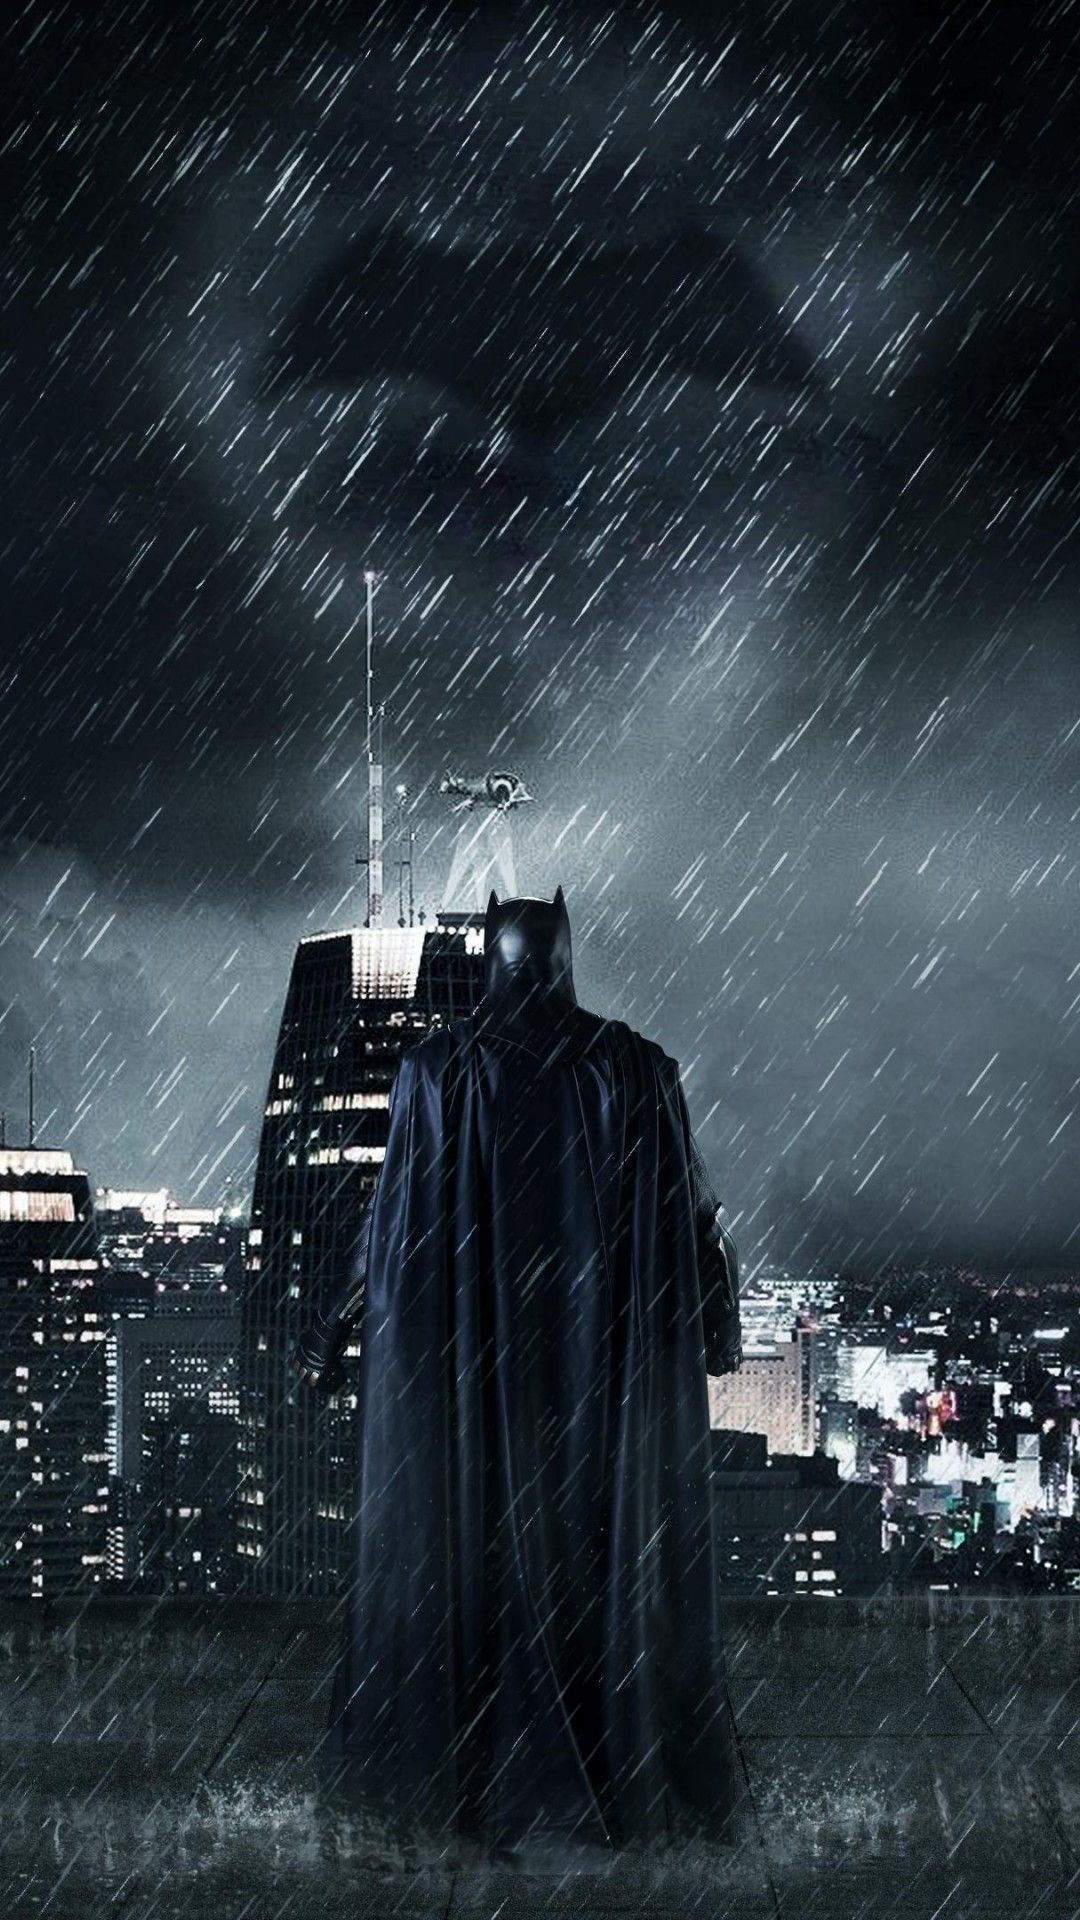 Free Download Gotham City Batman Hd Wallpaper For Desktop And Mobiles 